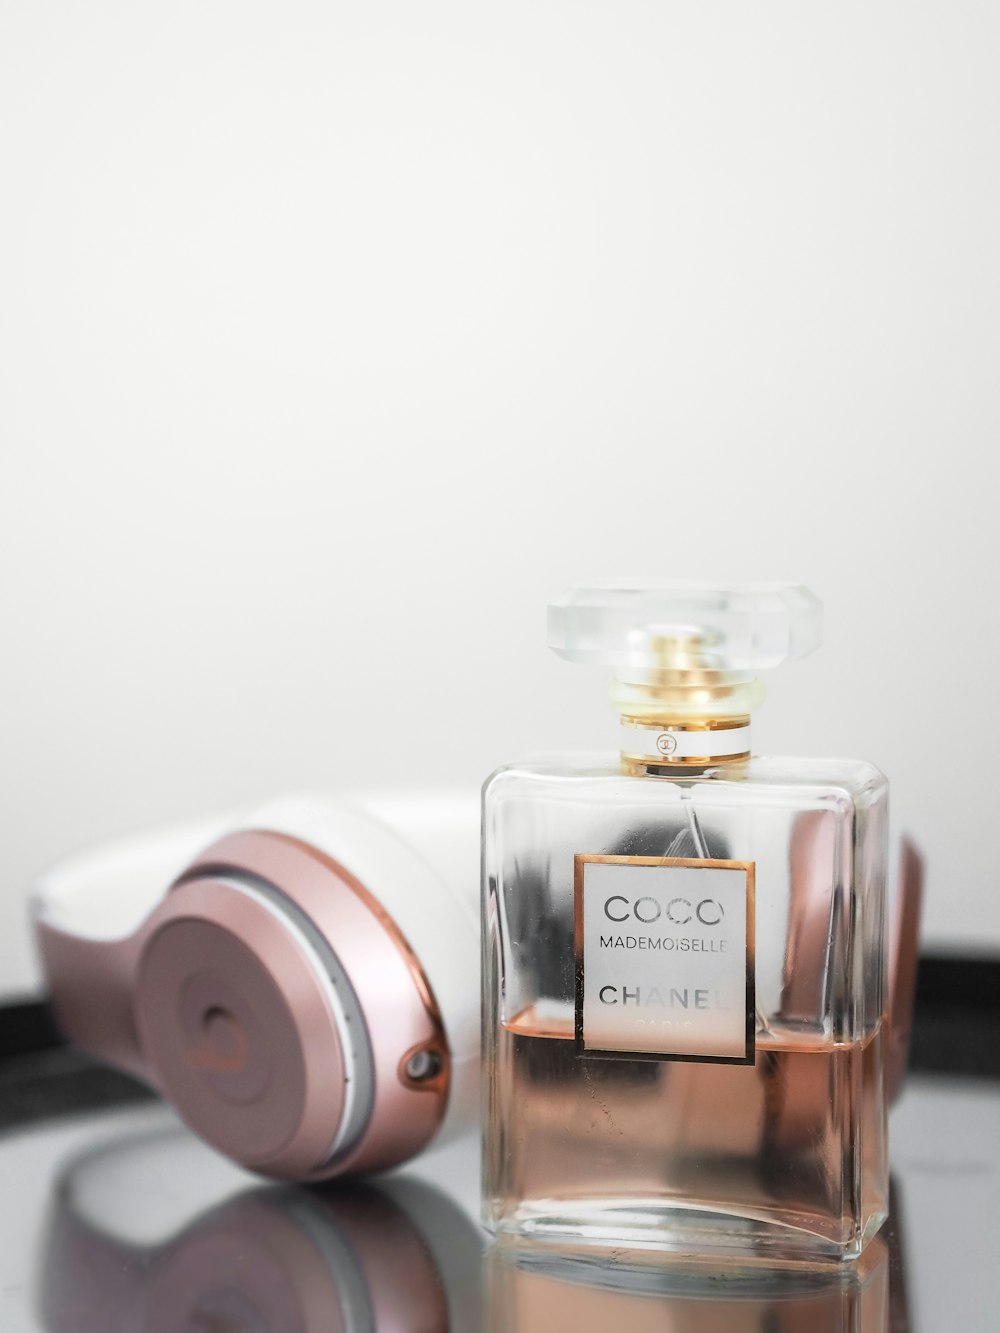 chanel perfume bottle beside pink beats by dr dre headphones